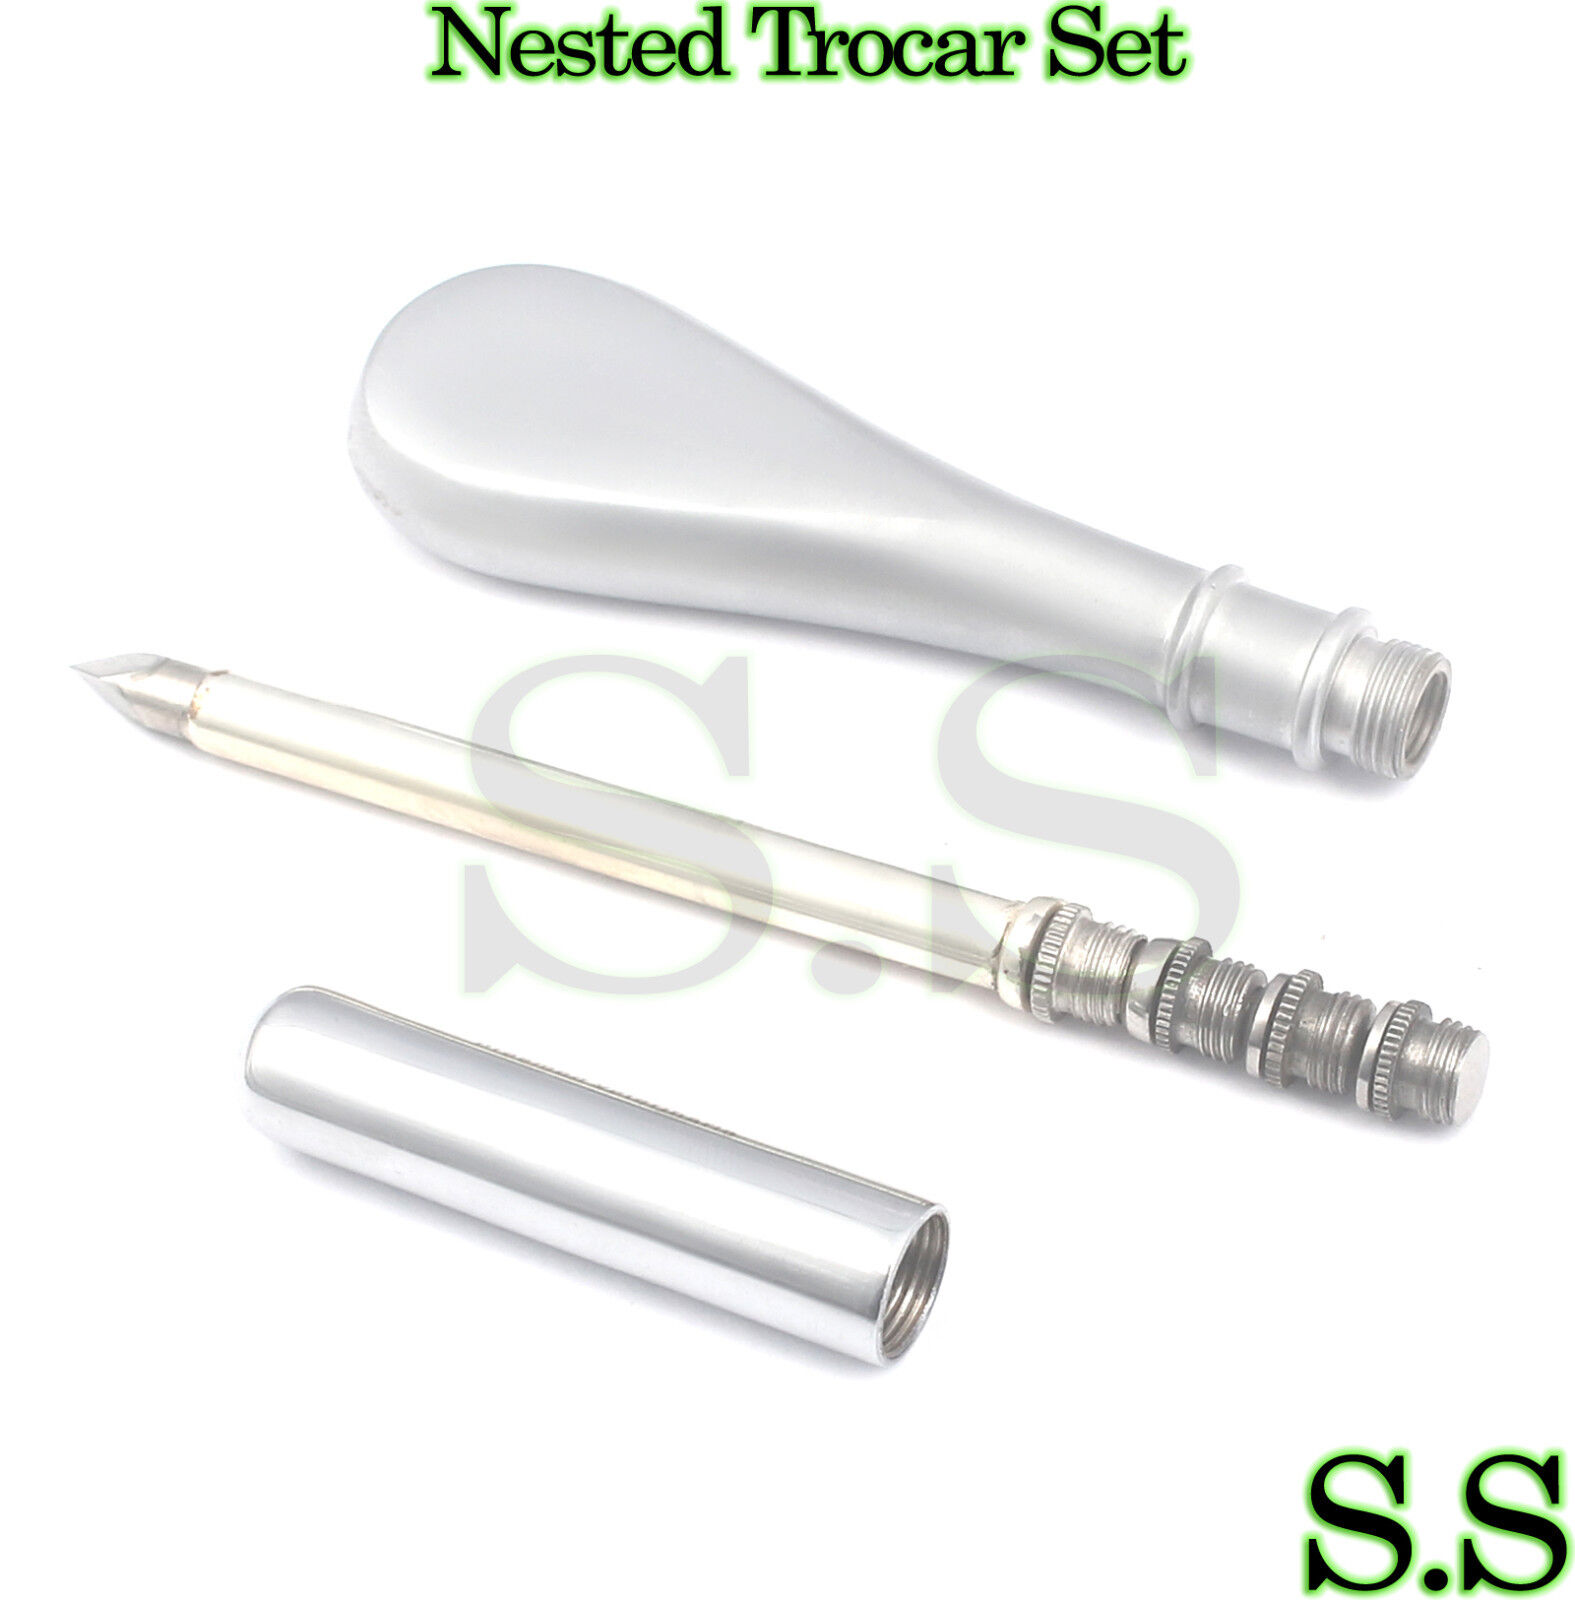 NESTED Trocar Set of 4, Medical Surgical Instruments